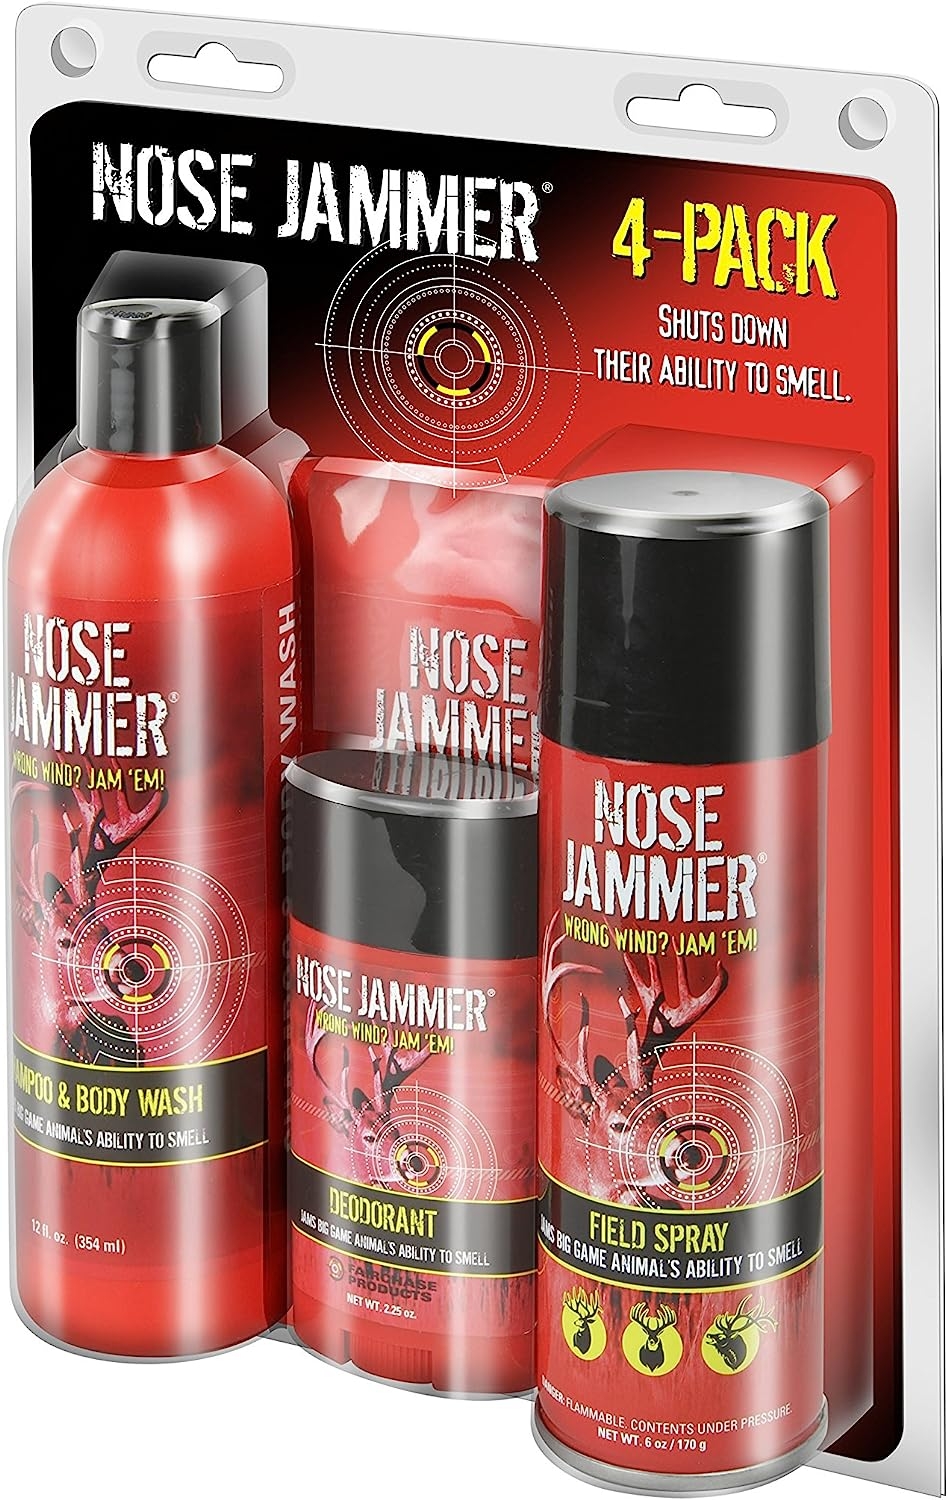 Nose Jammer Natural Hunting Scent Eliminator Deer Scent Blocker Best Value Combination 4-Pack Kit (Field Spray, Deodorant,